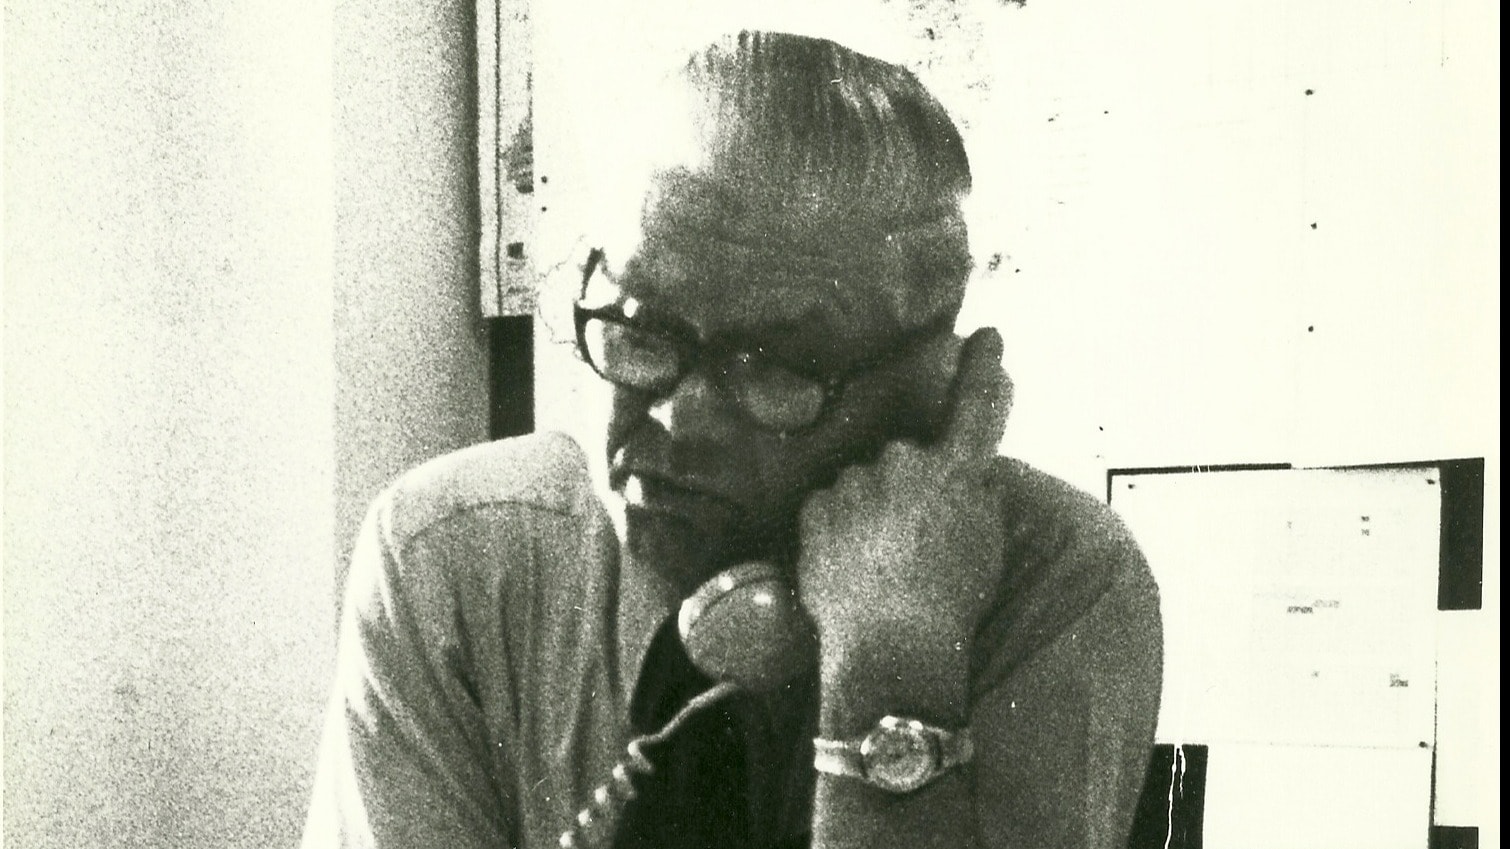 Bill Watson at His Desk, late 70s.